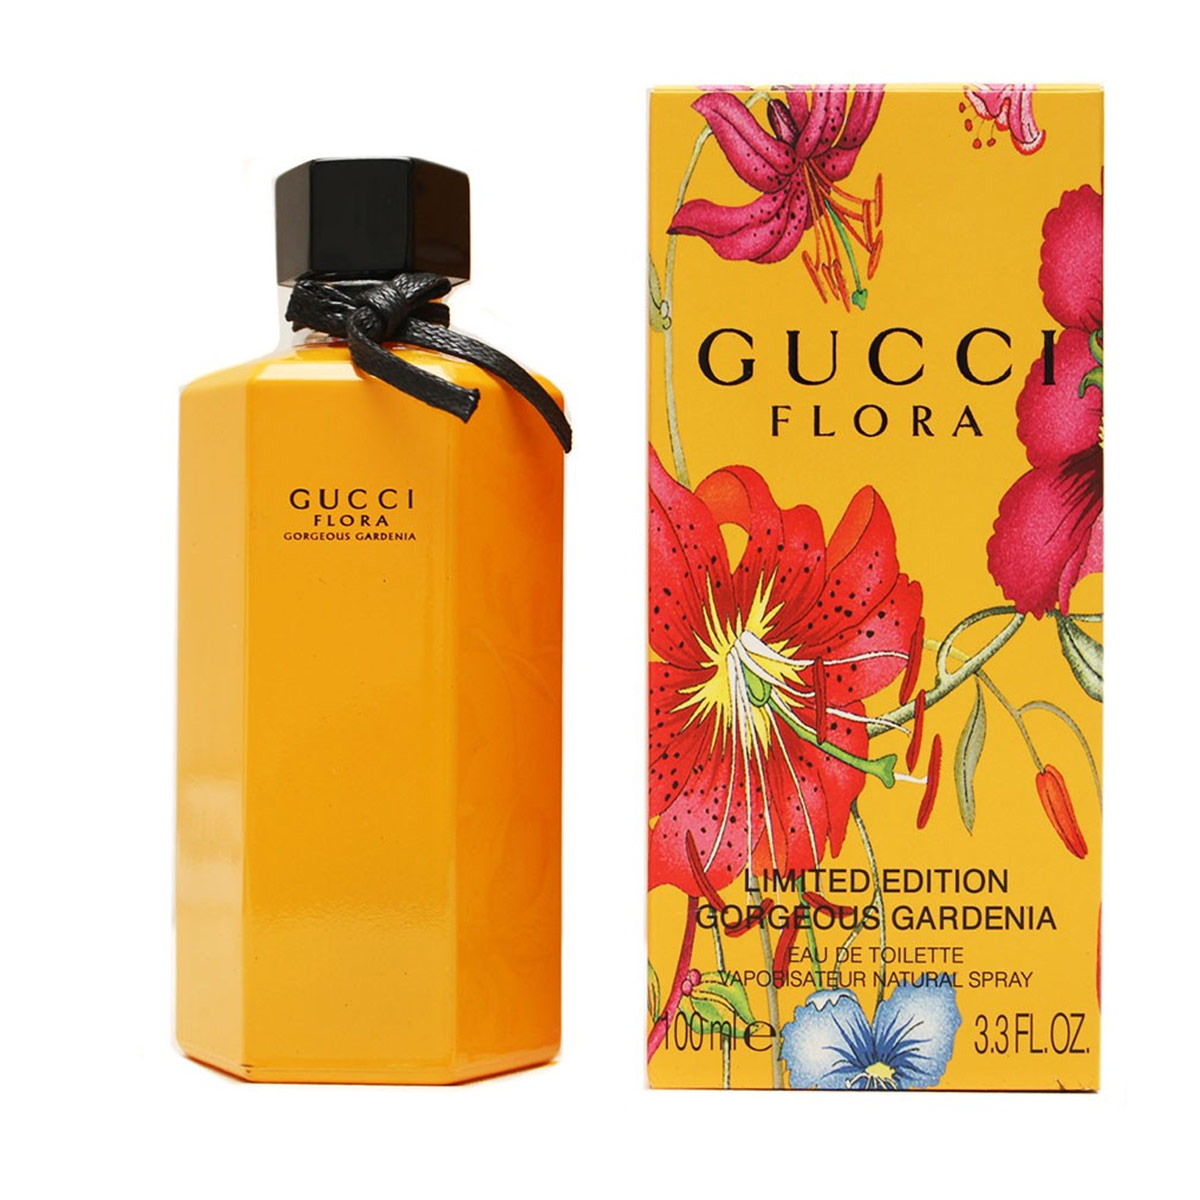 Gucci flora by gucci gardenia фото